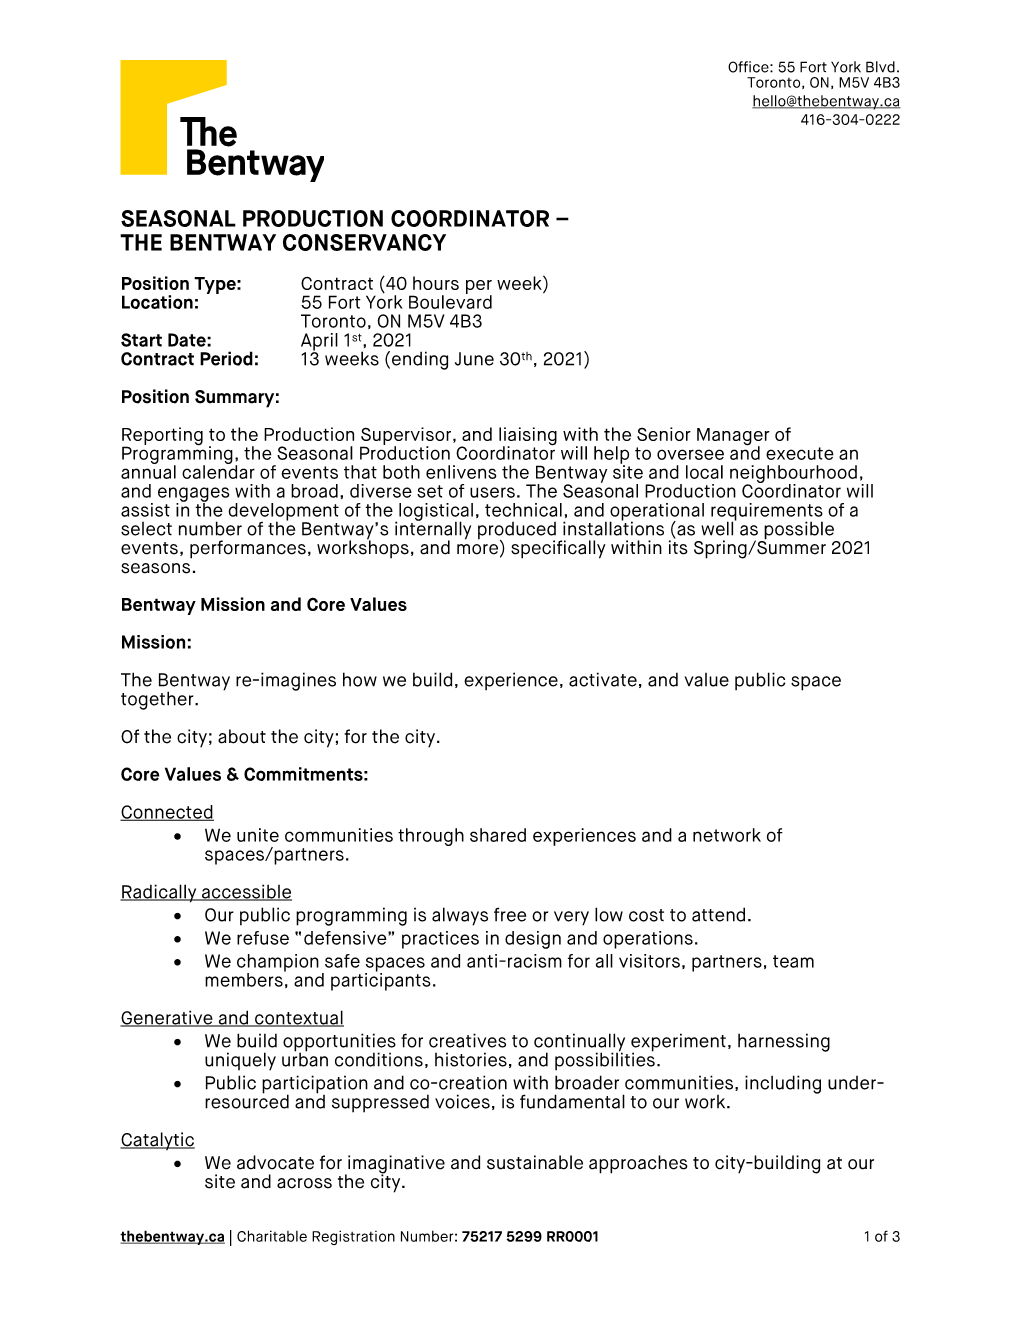 Seasonal Production Coordinator – the Bentway Conservancy